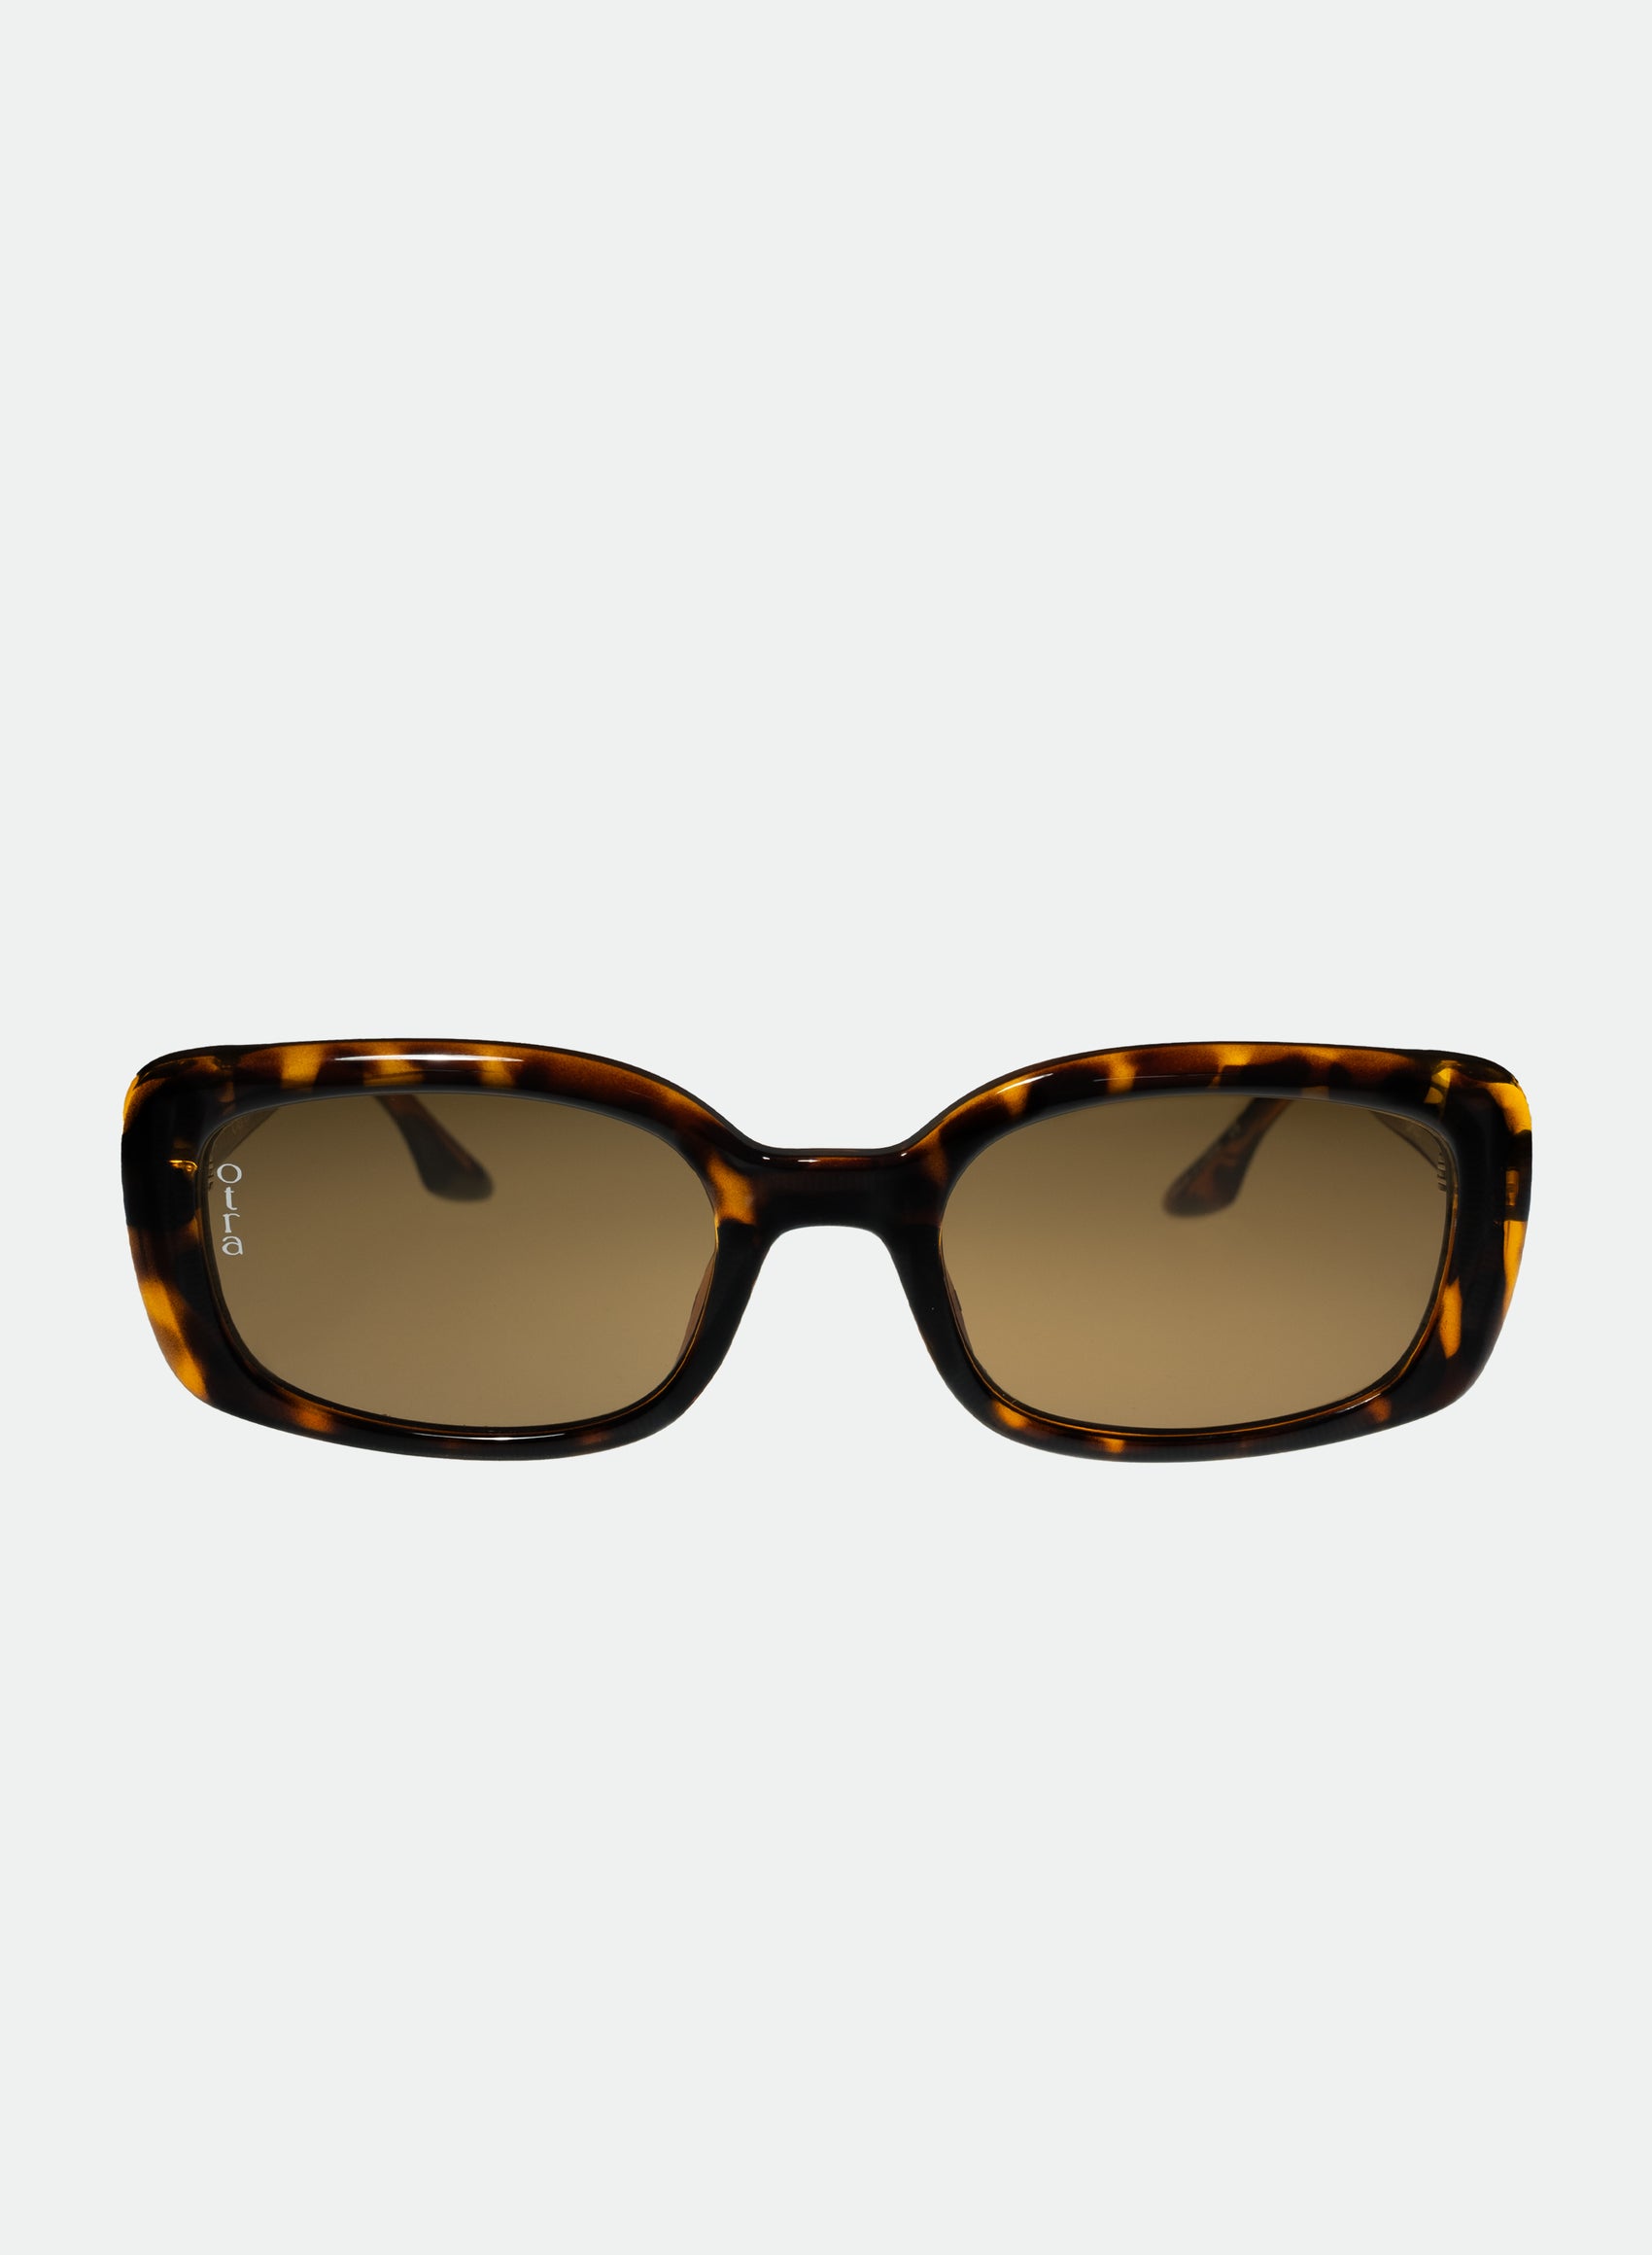 Daisy small rectangle sunglasses in brown tortoiseshell